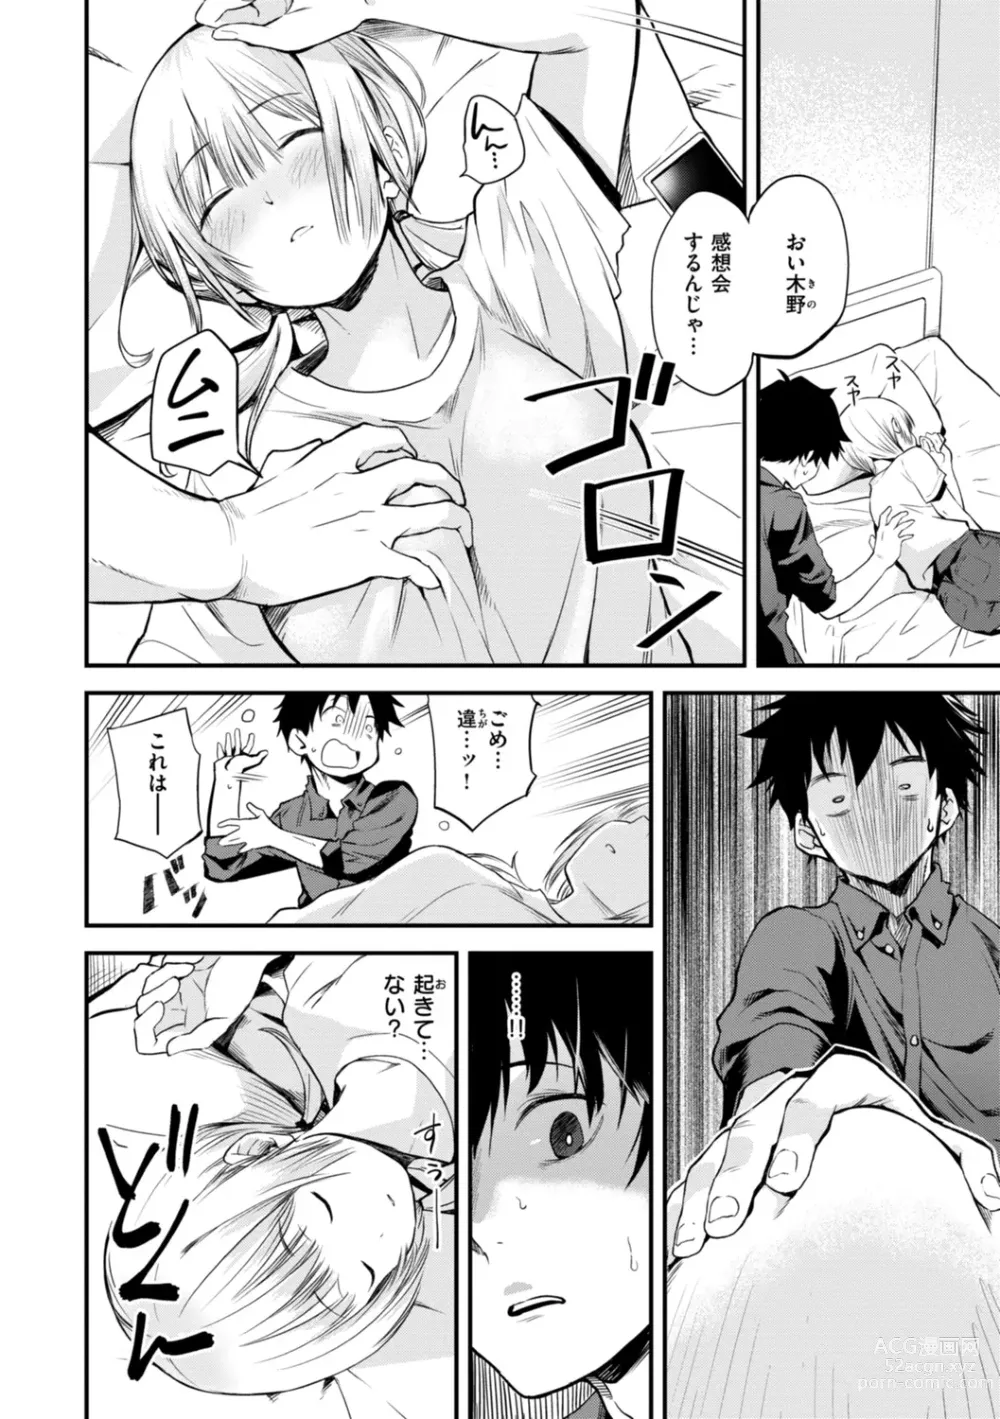 Page 8 of manga Jaa, Ecchi Shichau? - Shall we have H then?